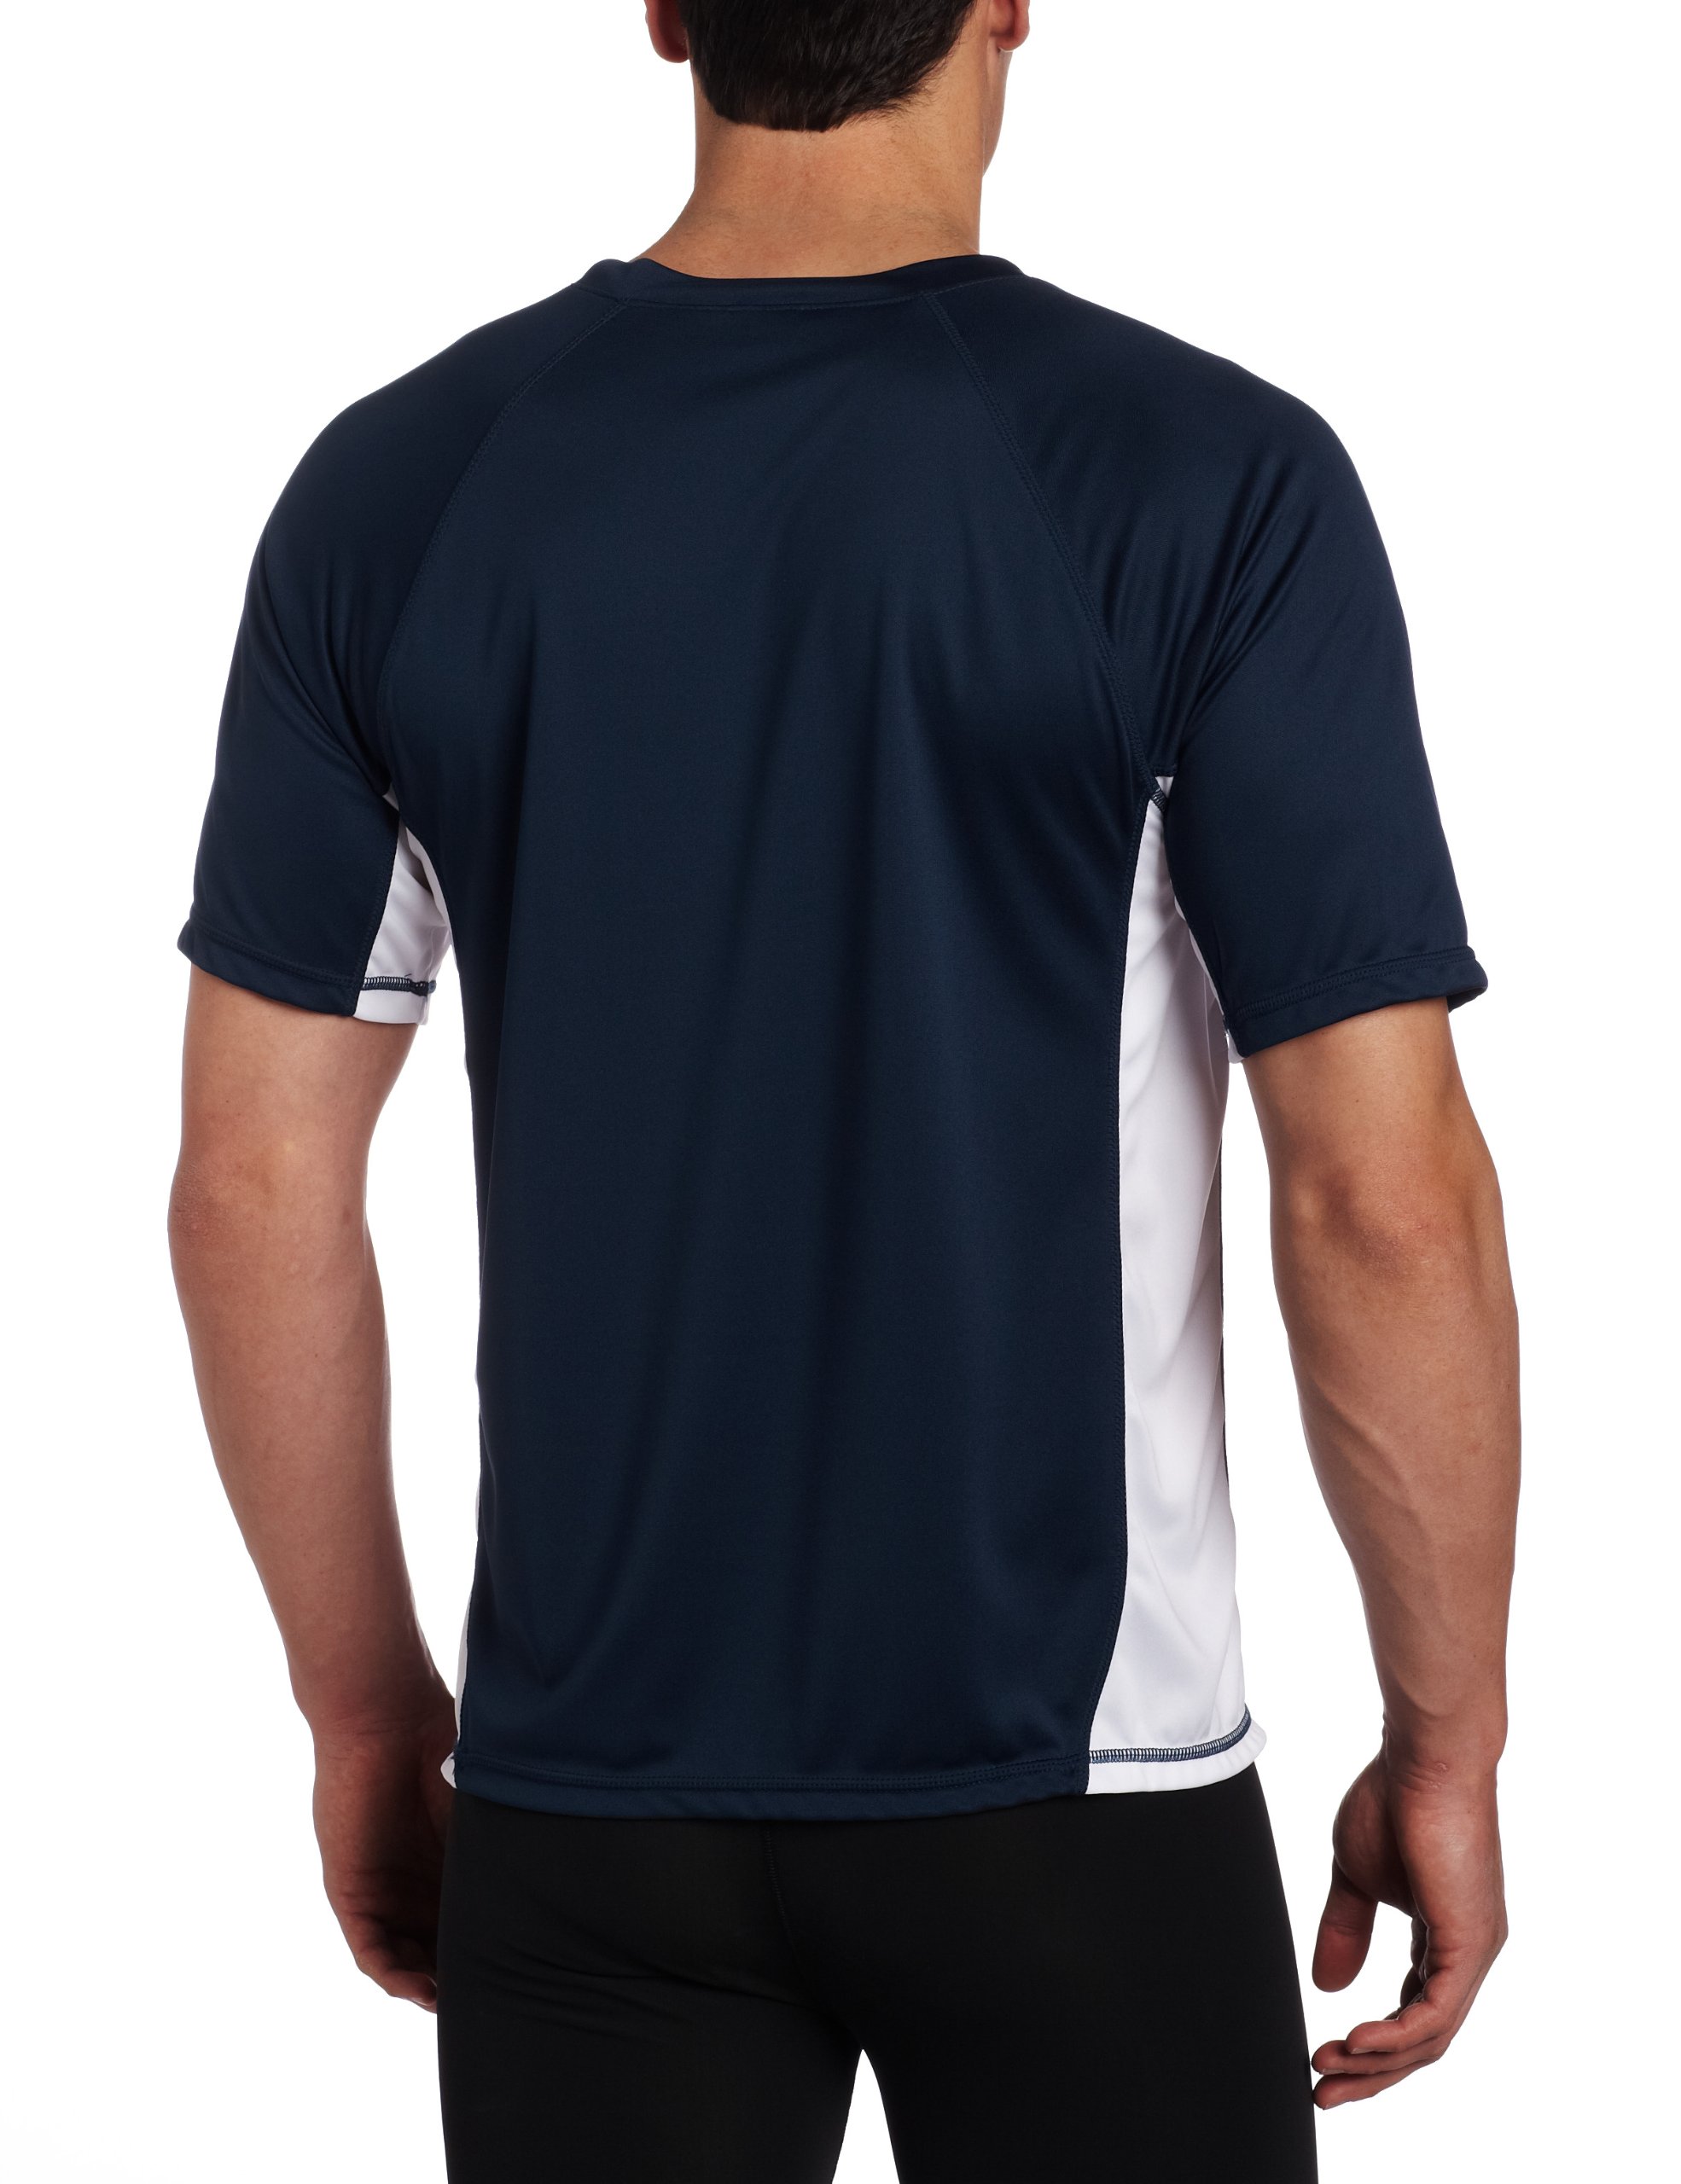 Kanu Surf Men's Cb Rashguard UPF 50+ Swim Shirts (Regular & Extended Sizes)